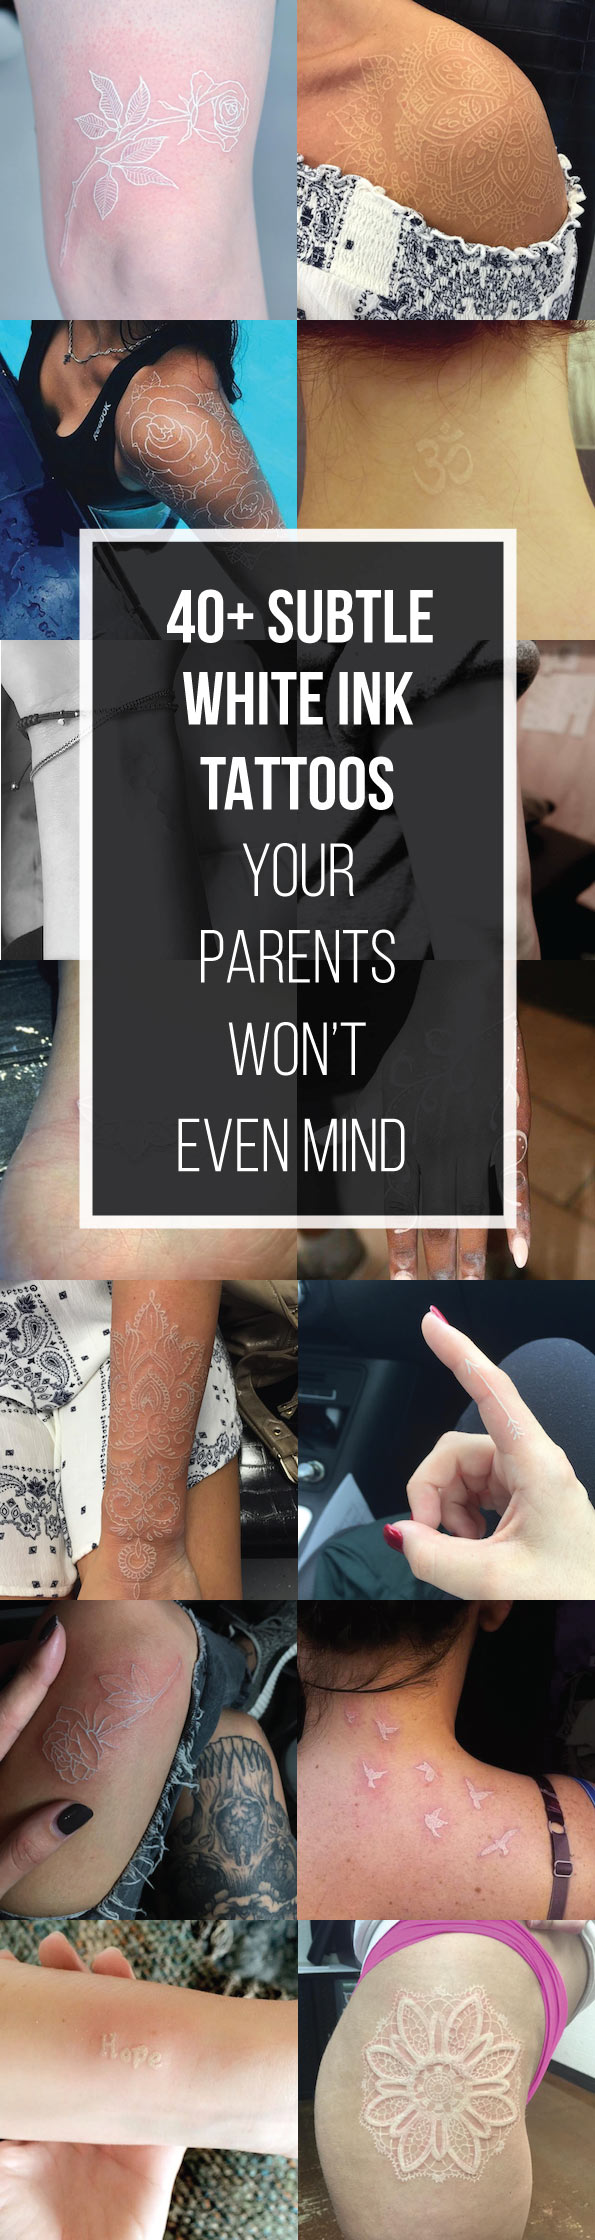 40+ Subtle White Ink Tattoos Your Parents Won't Even Mind | TattooBlend